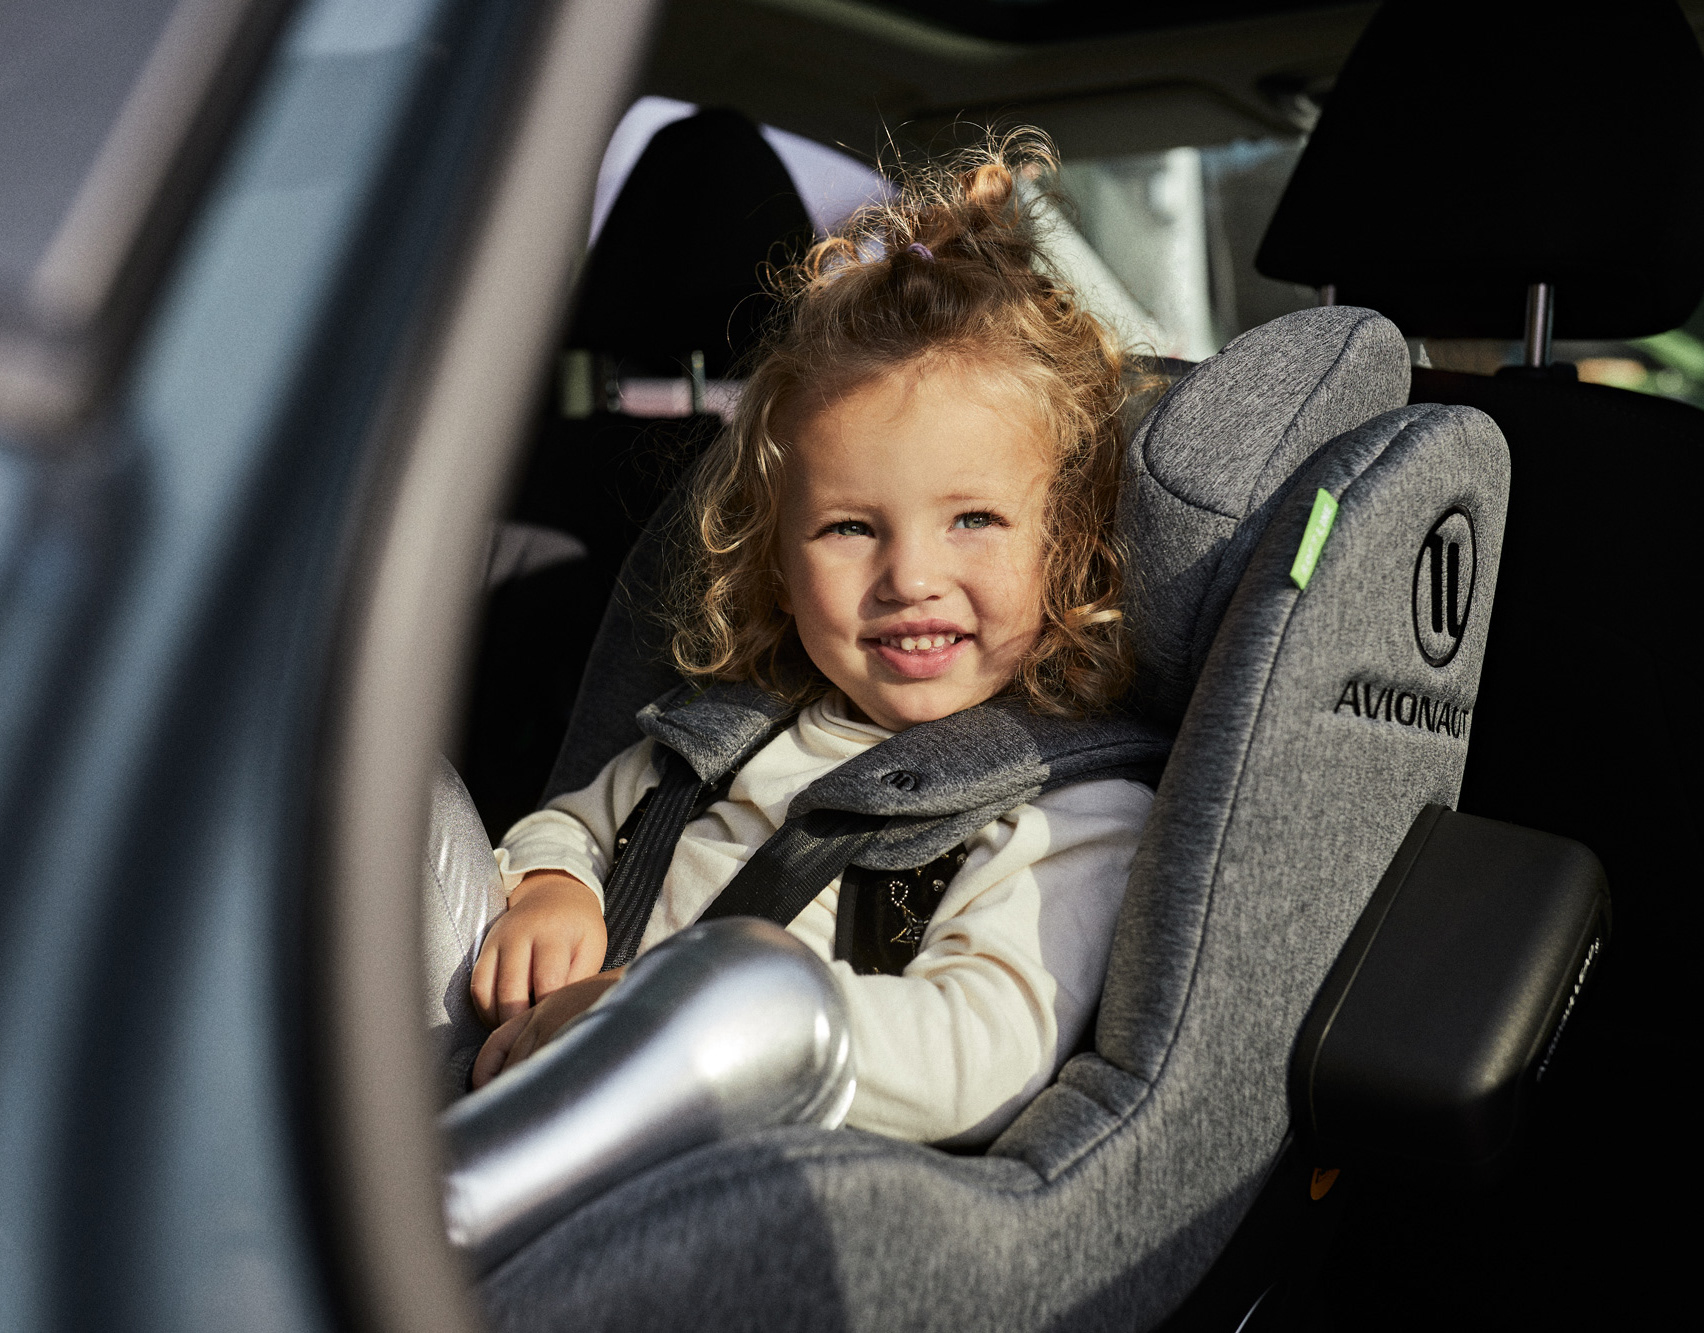 SKY: Kindersitz mit Gurt Montage im Auto